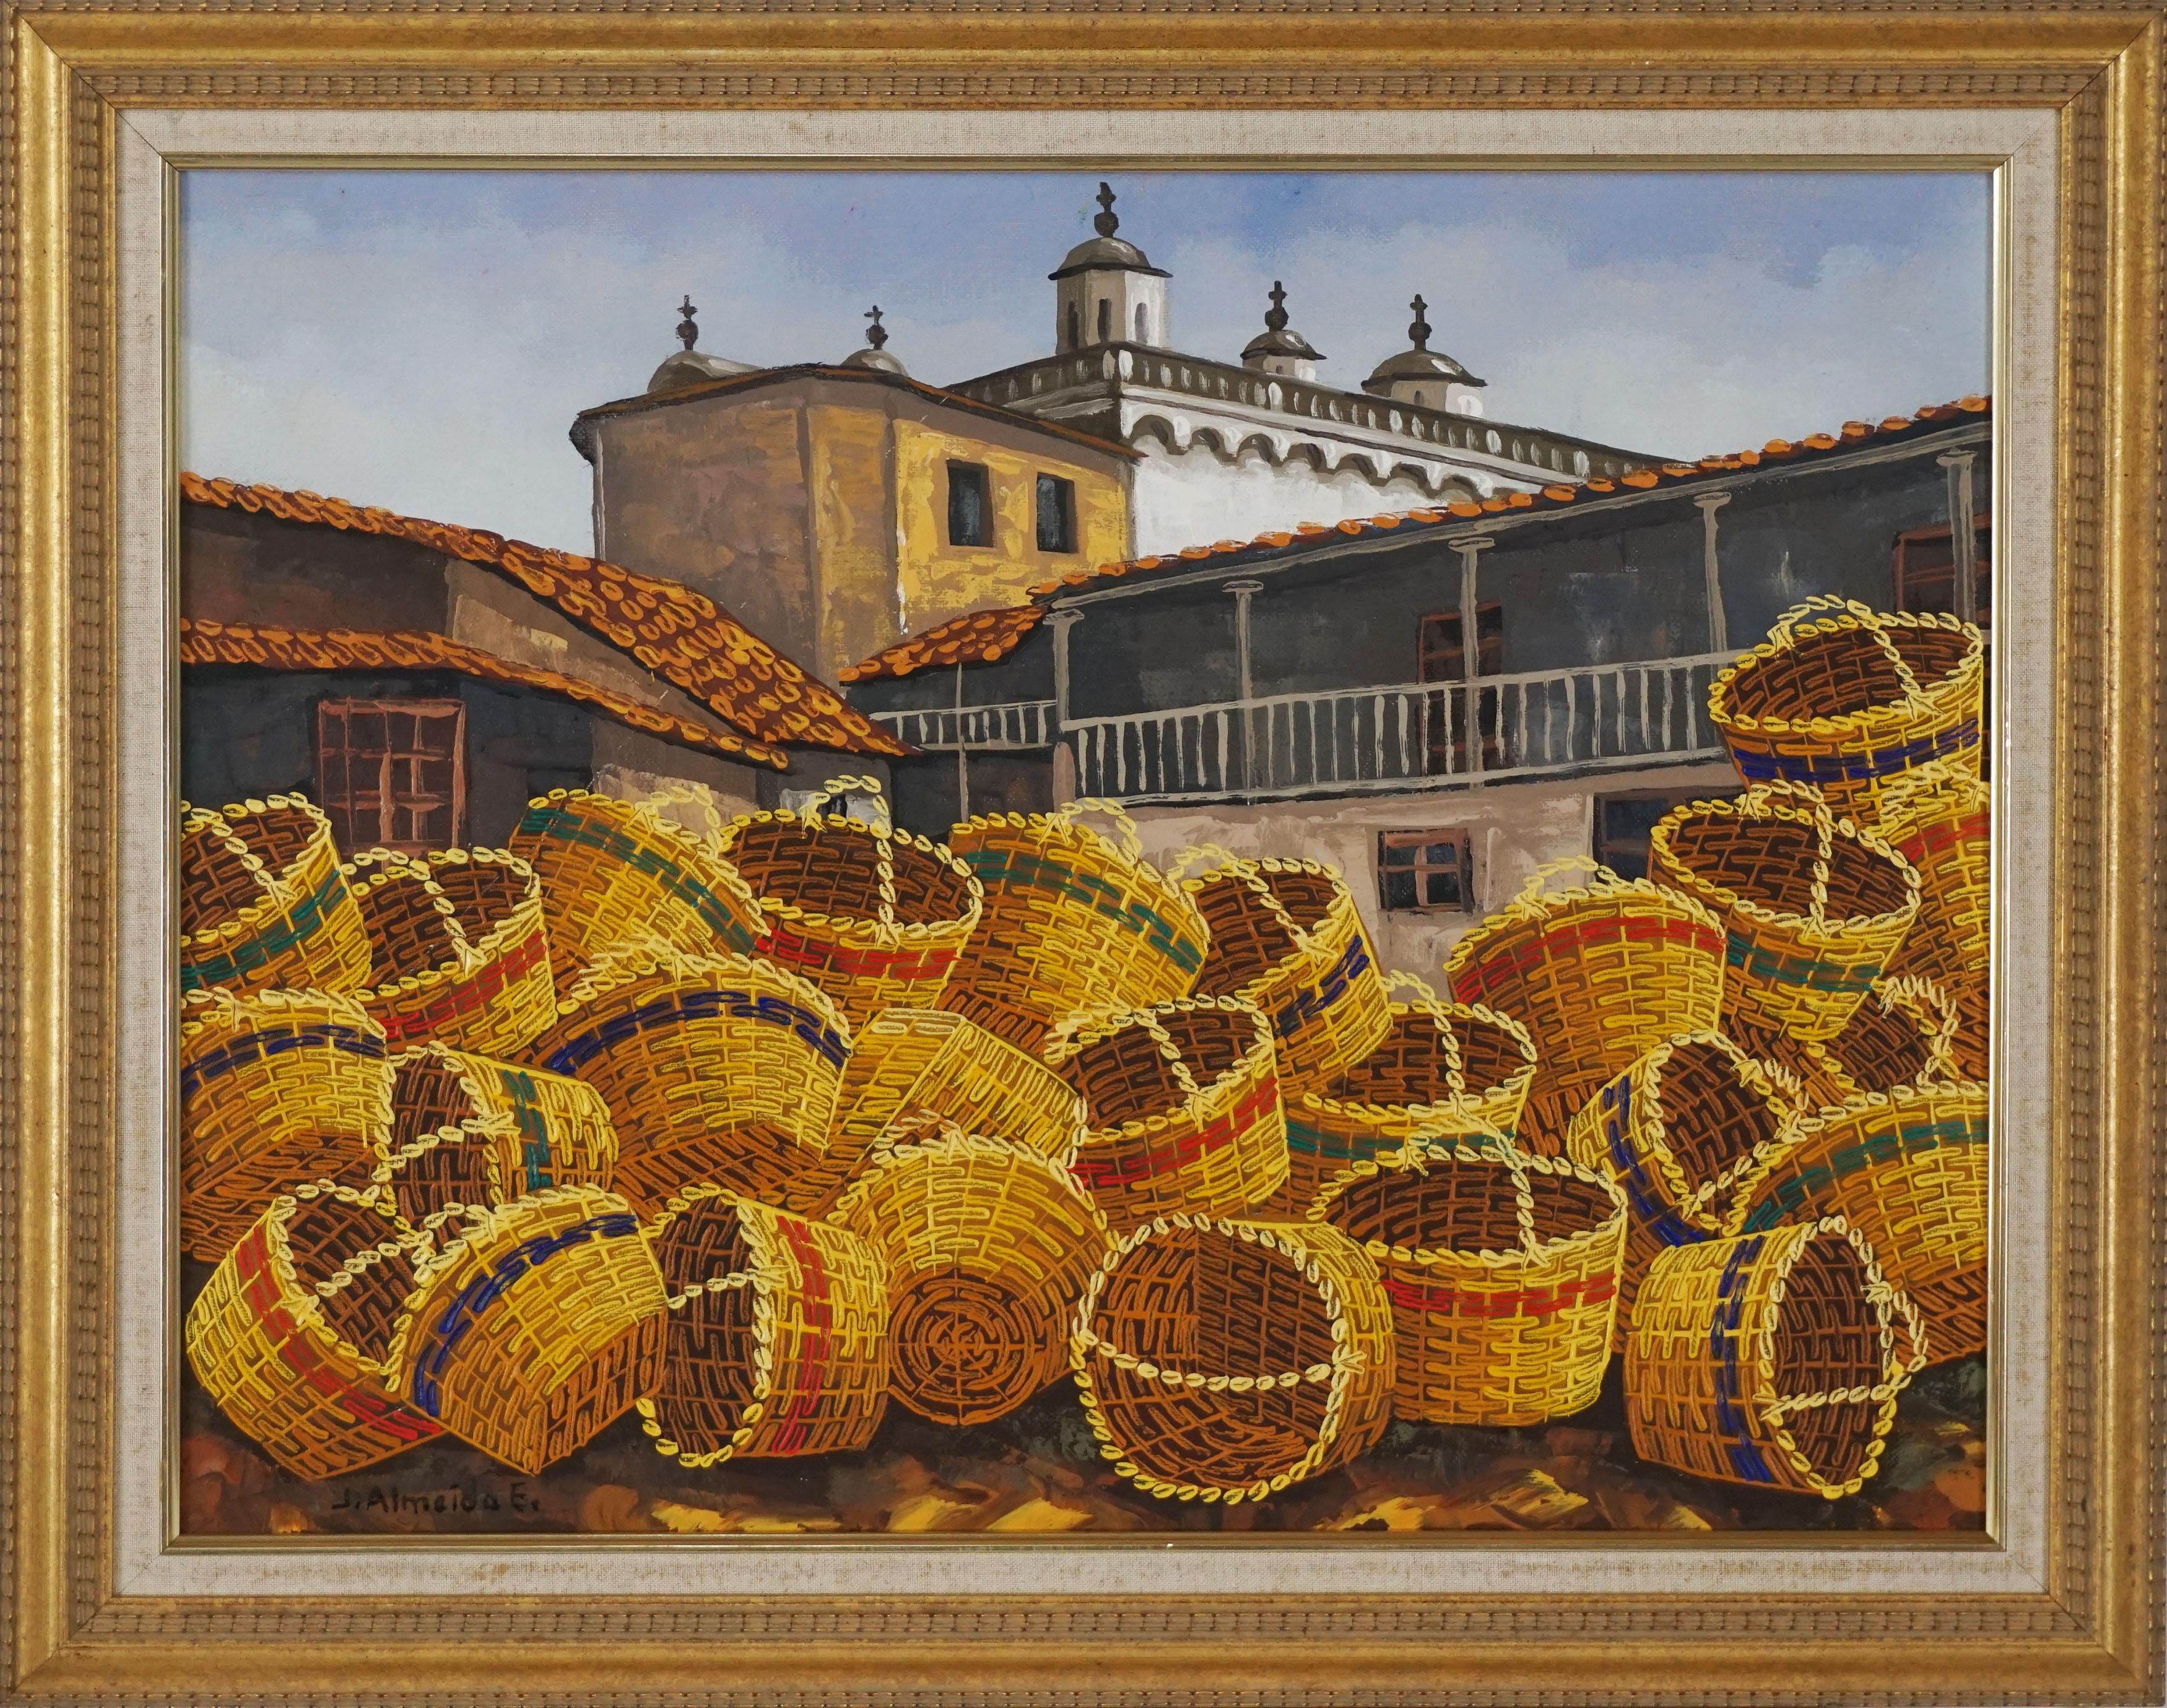 J Almeida E Landscape Painting - Market Baskets in Old Town